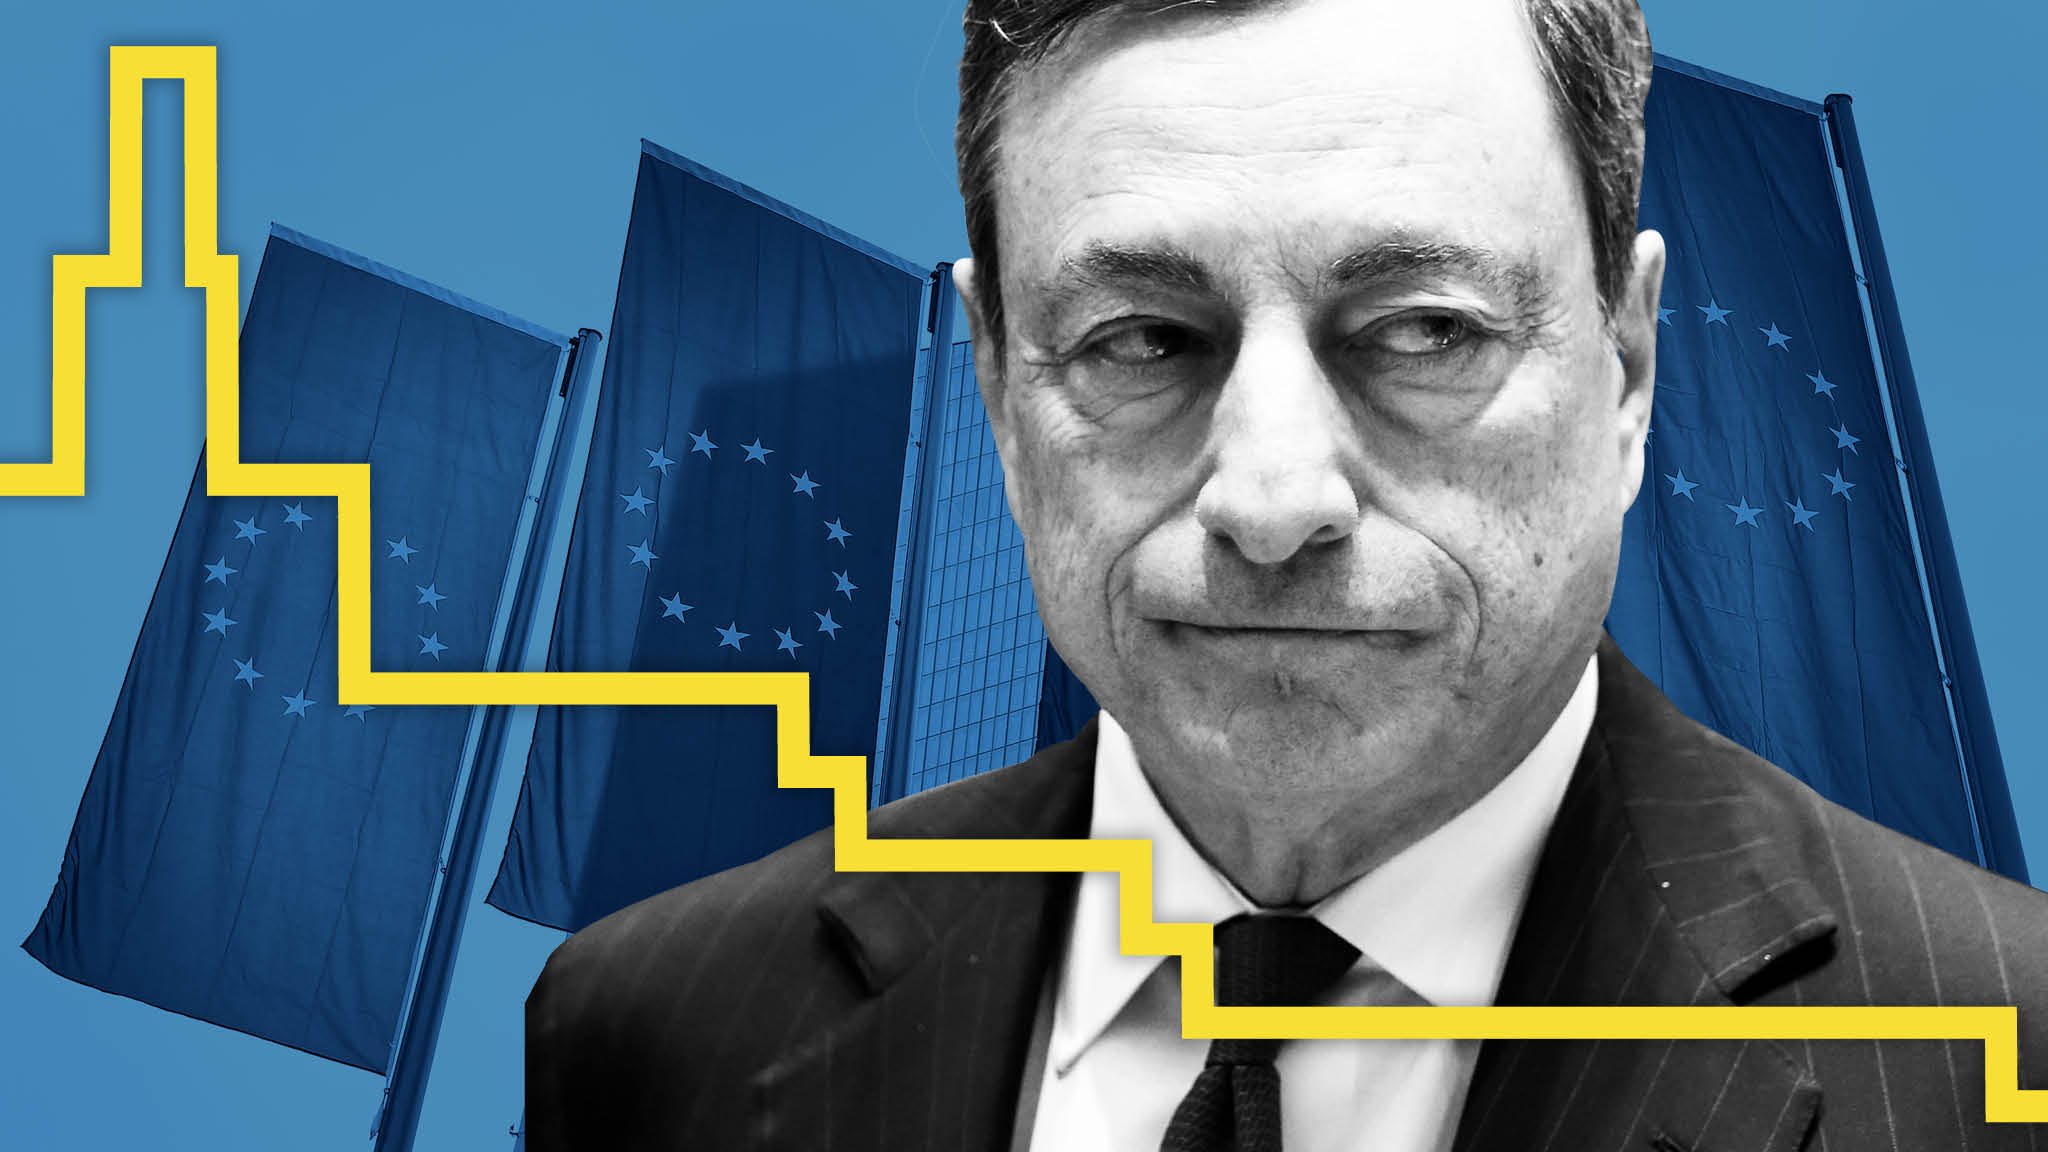 How Mario Draghi brought determination to calm market turmoil